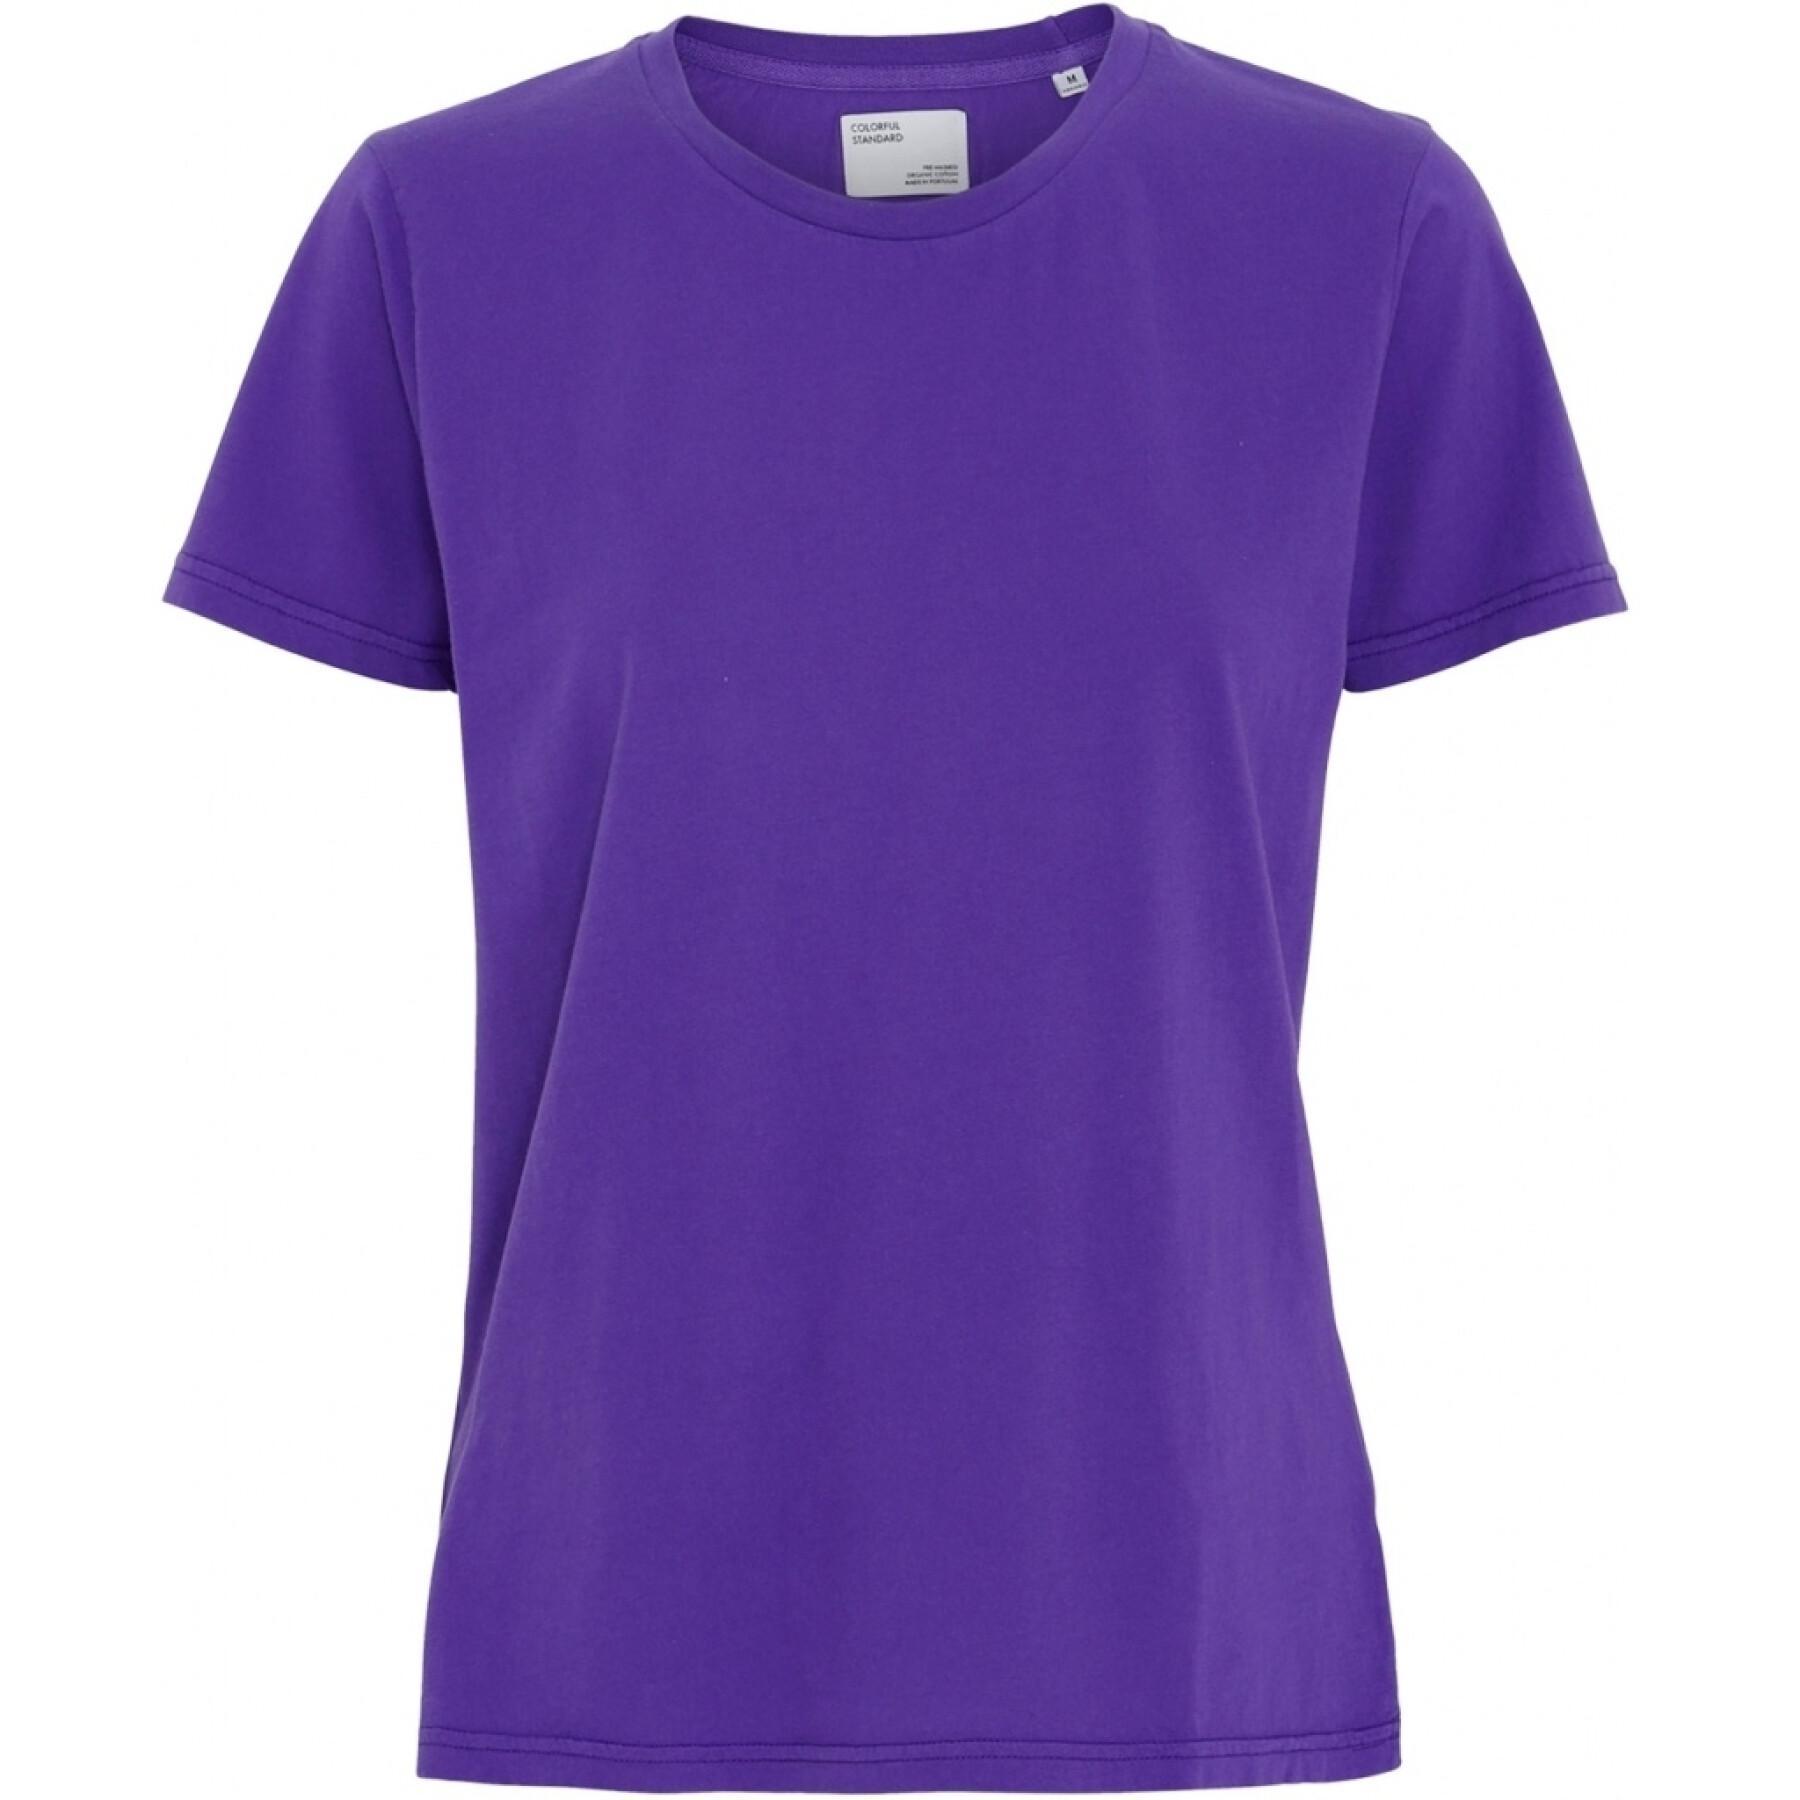 Camiseta feminina Colorful Standard Light Organic ultra violet